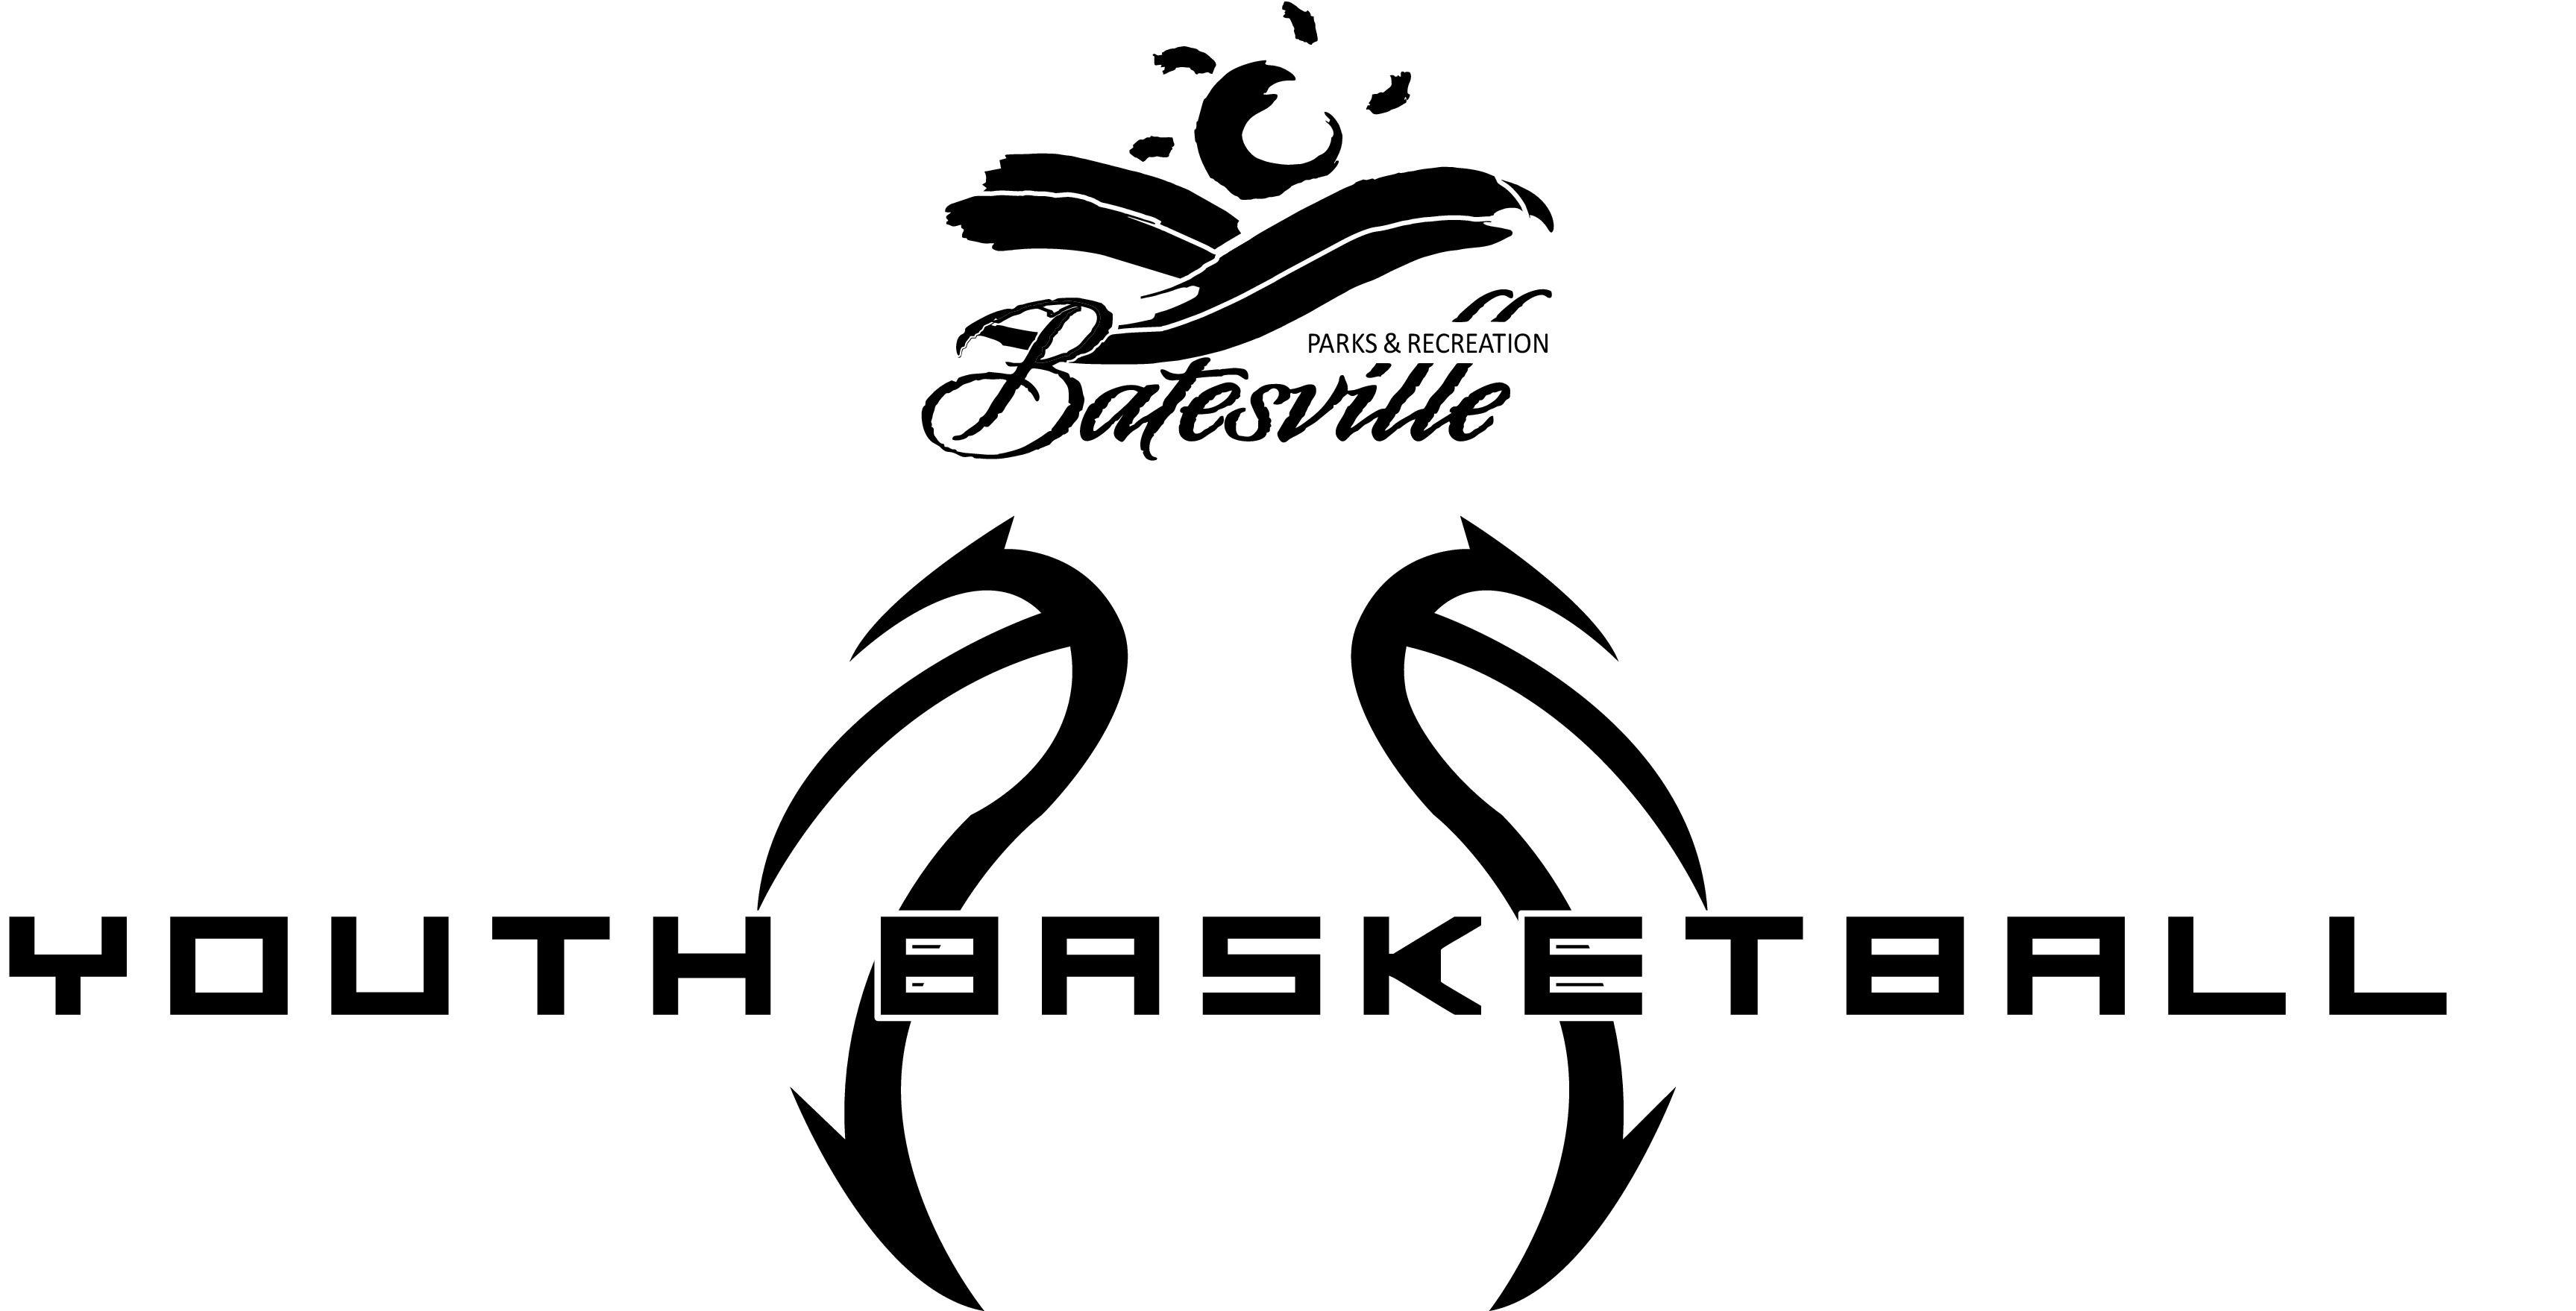 Youth Basketball Logo - YOUTH BASKETBALL. City of Batesville